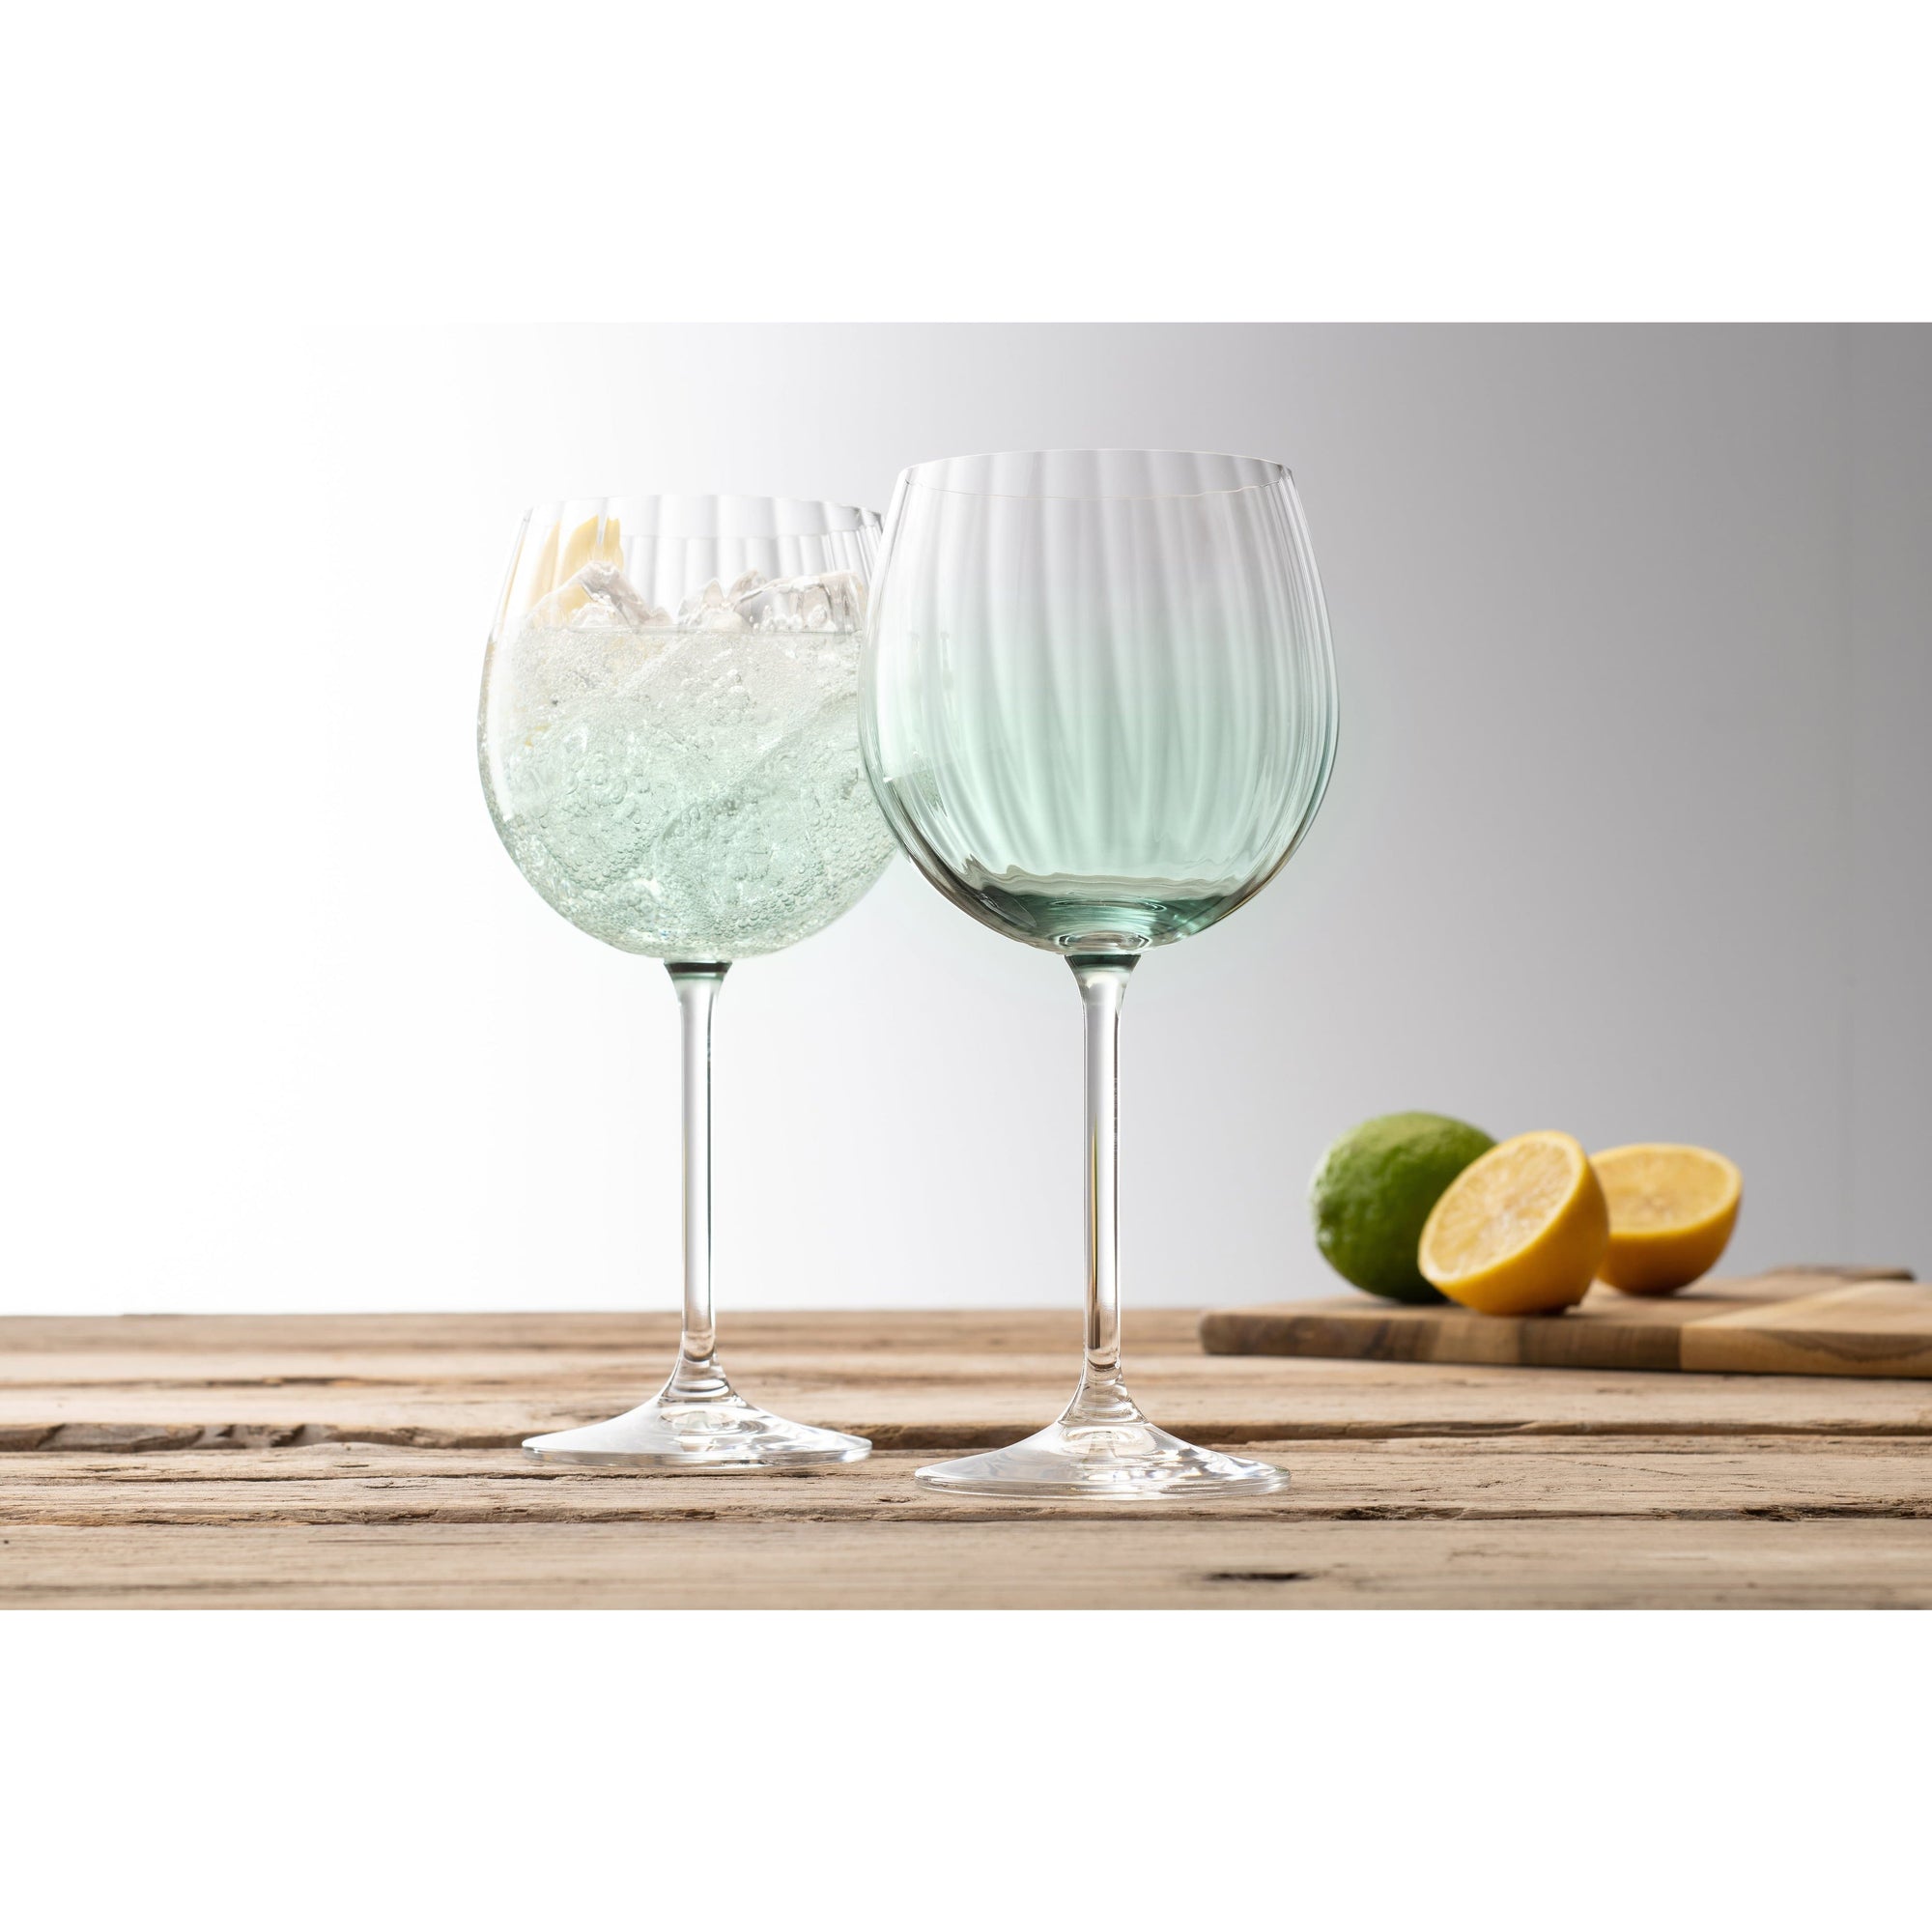 Erne Gin and Tonic Glass Pair Aqua - Galway Irish Crystal